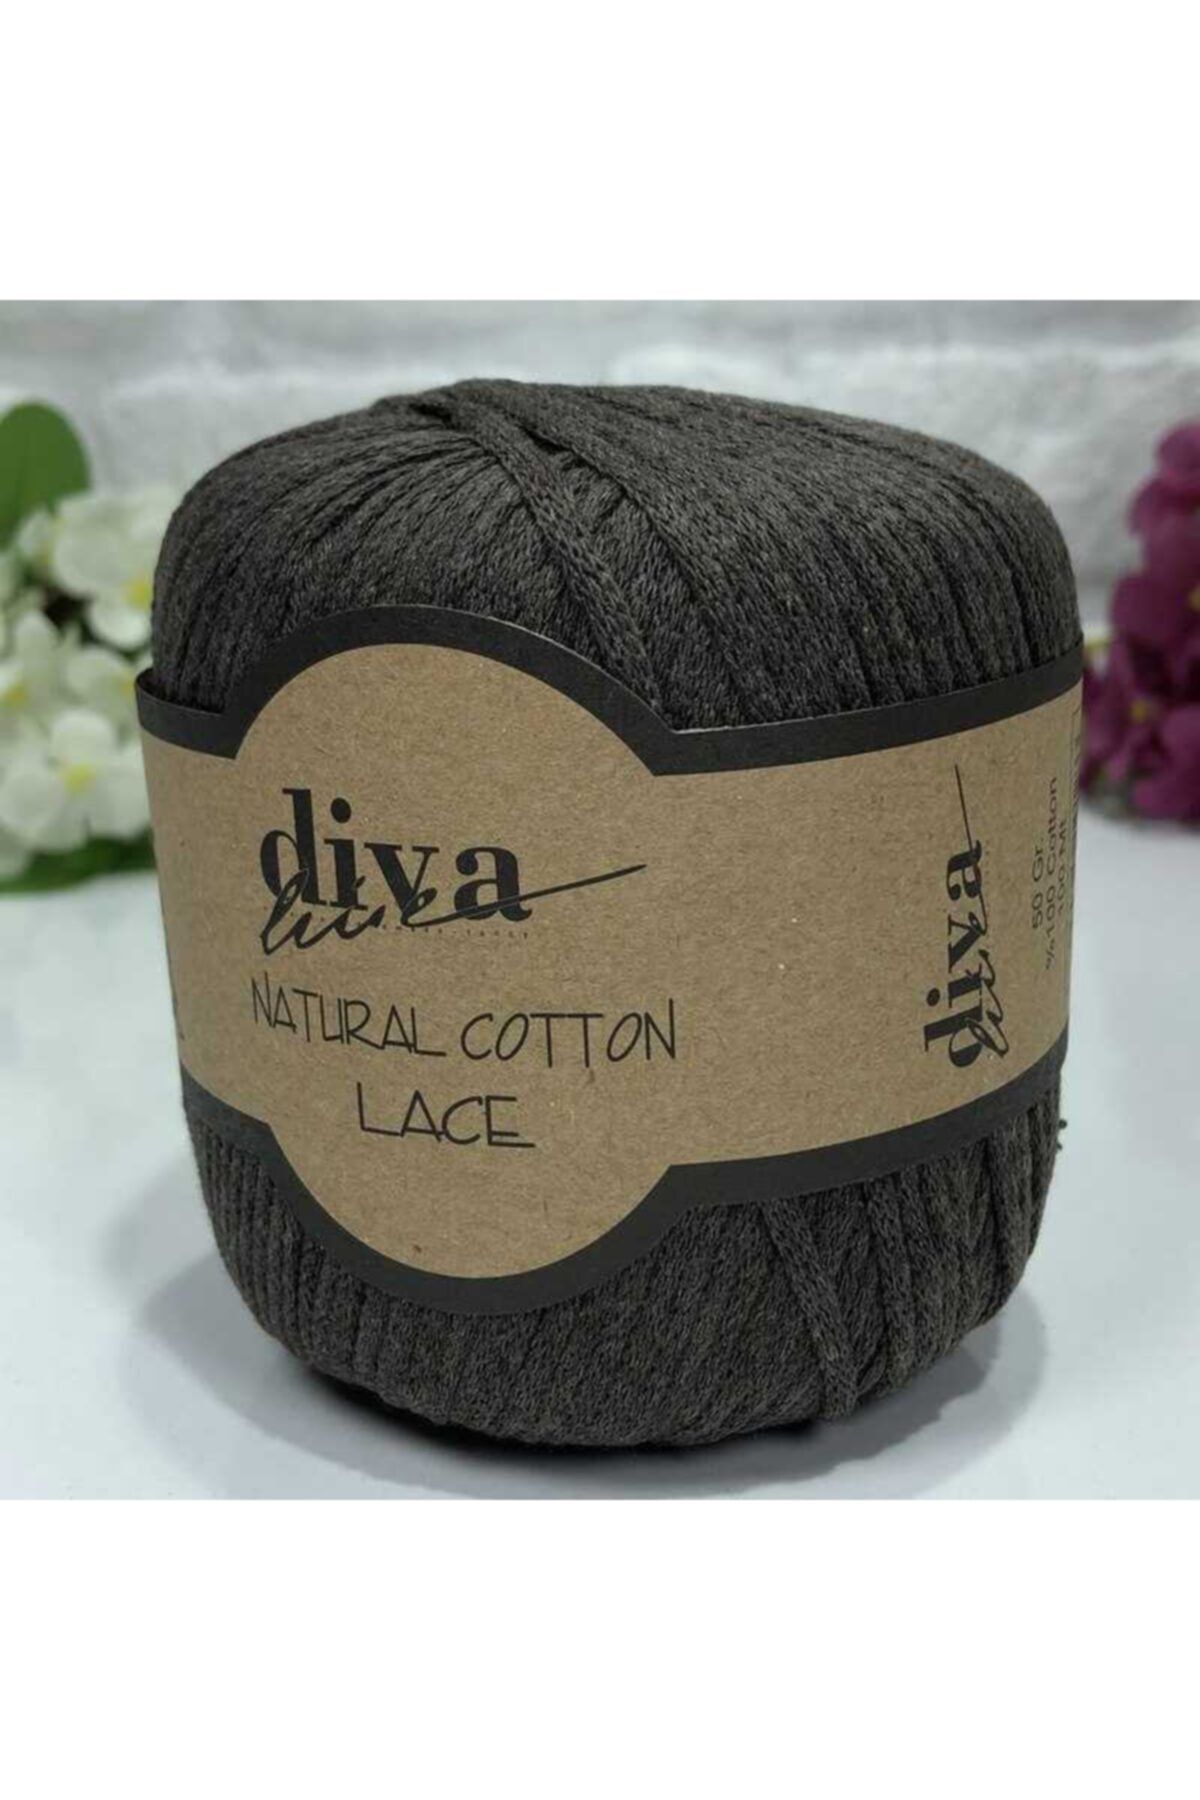 Diva İplik Diva Natural Cotton Lace Lase Ipi 169 Koyu Kahve